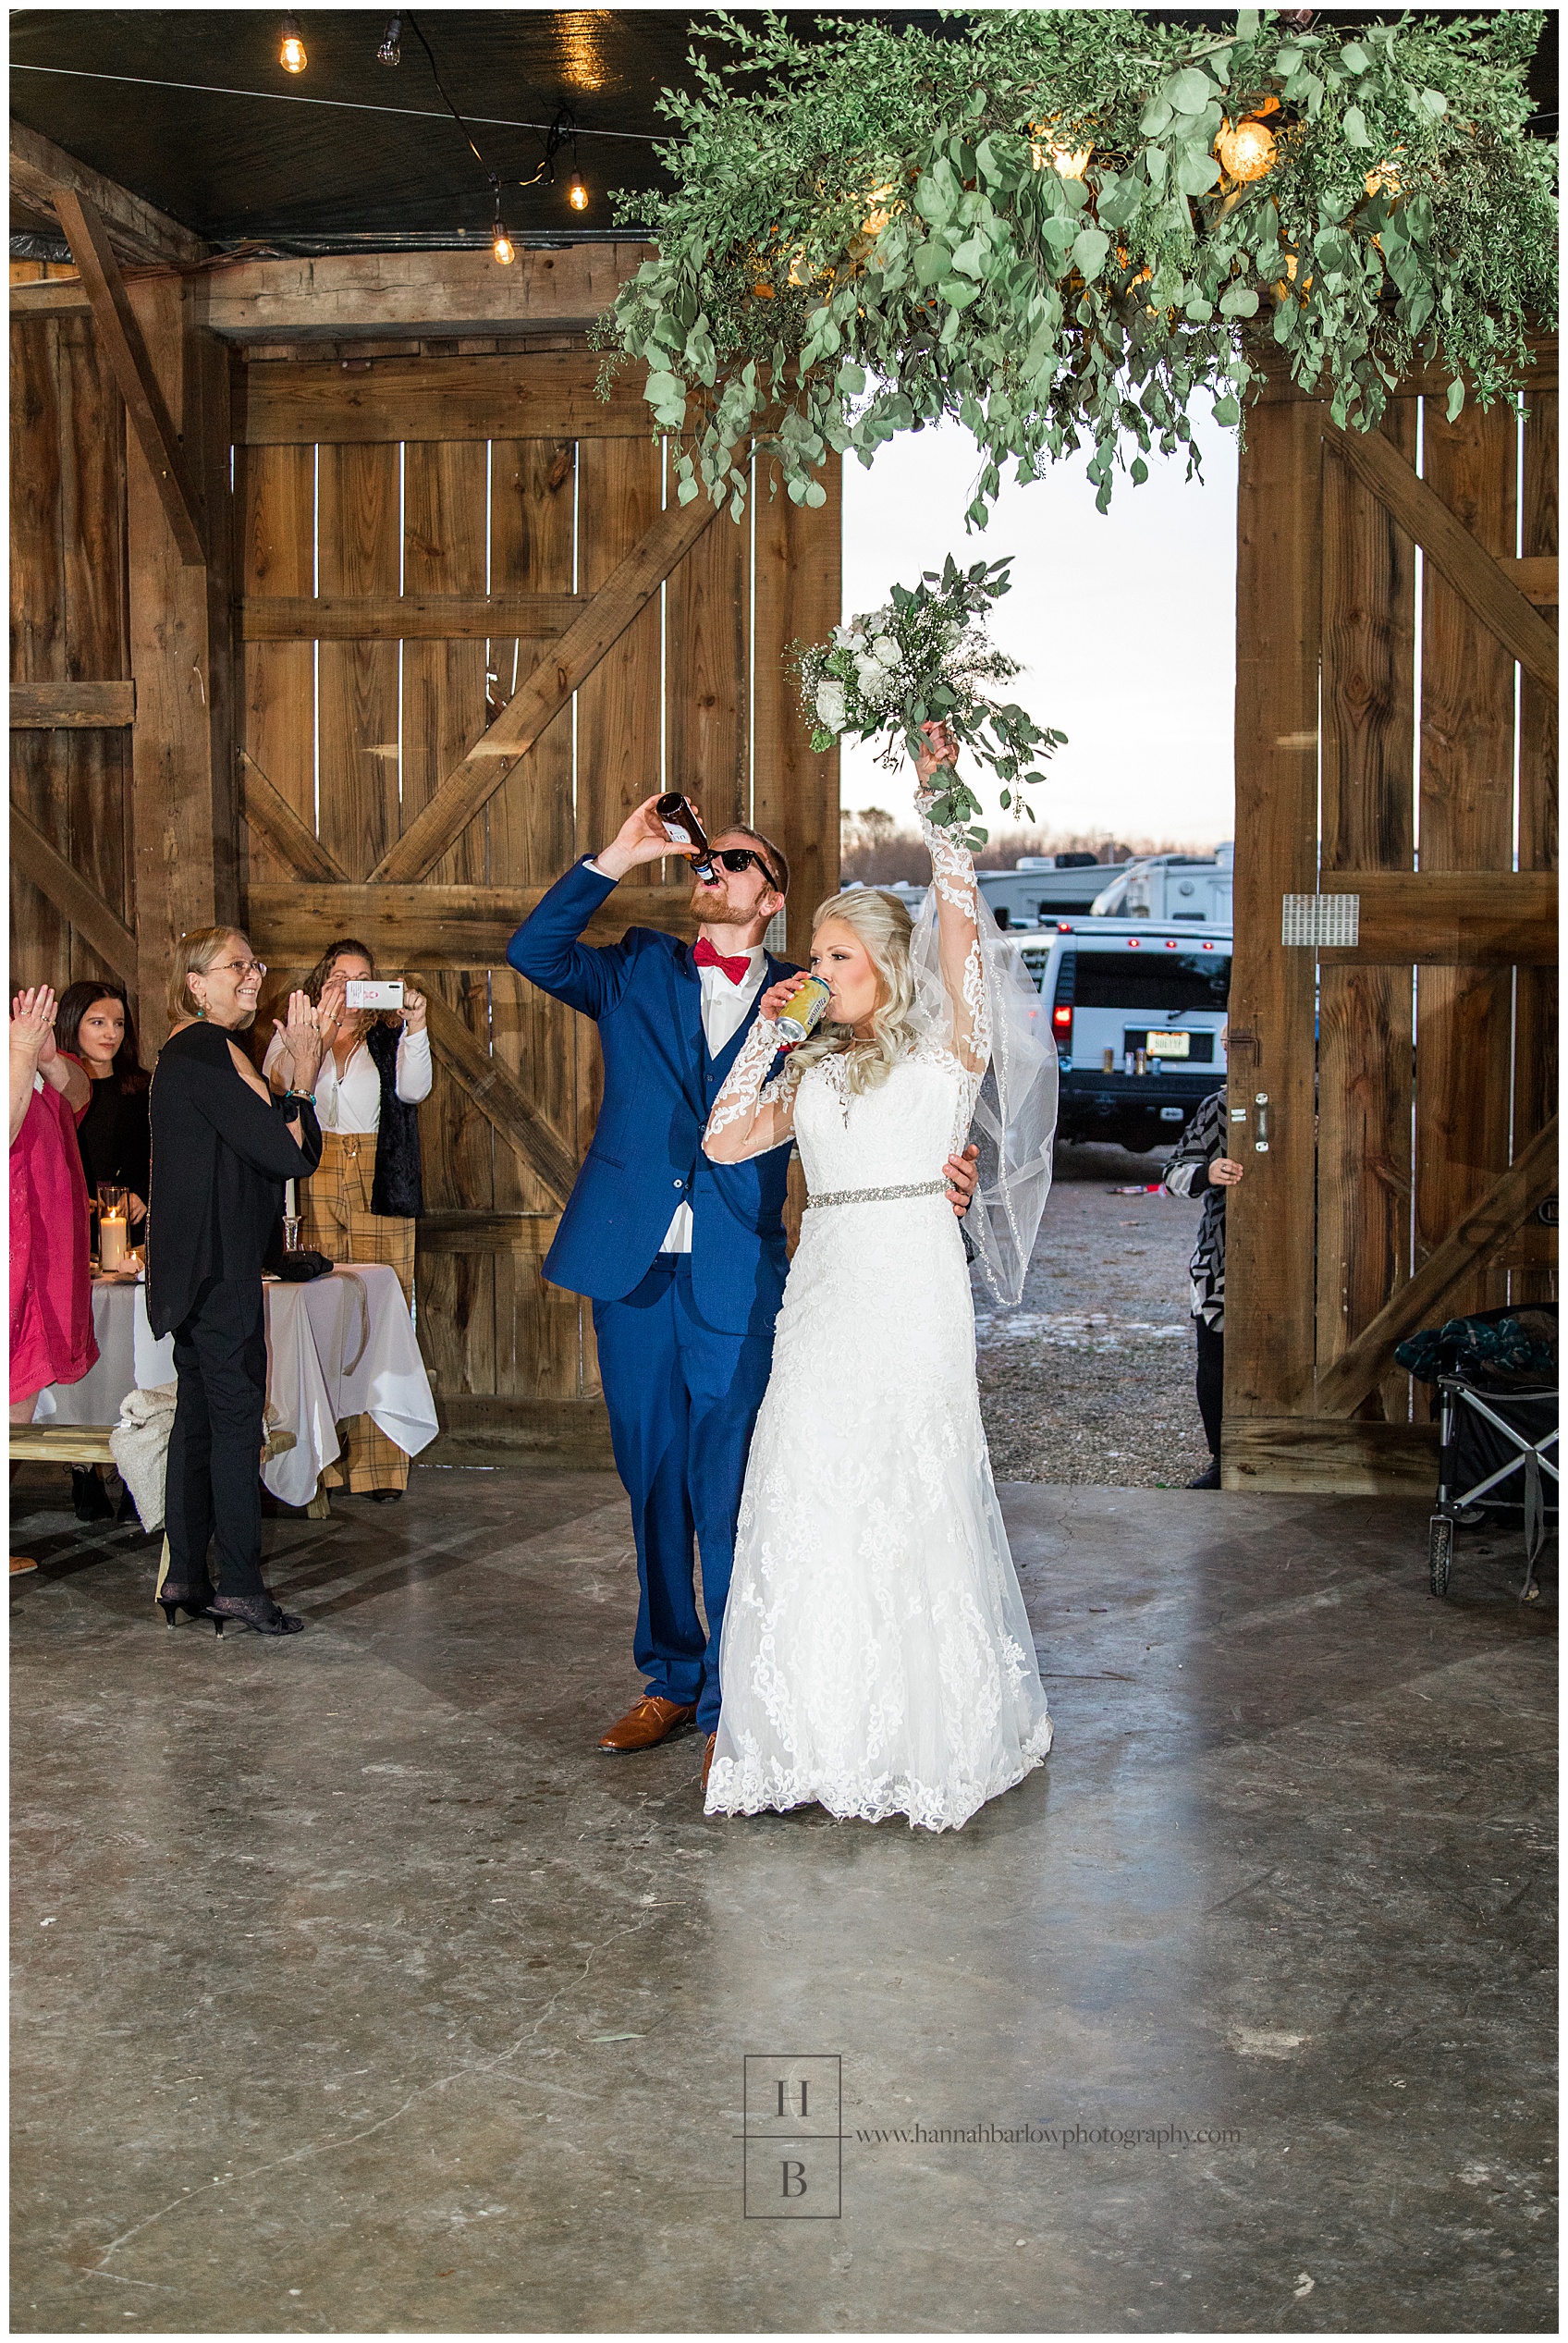 Couple Announced at Barn Wedding Reception in Cadiz Ohio